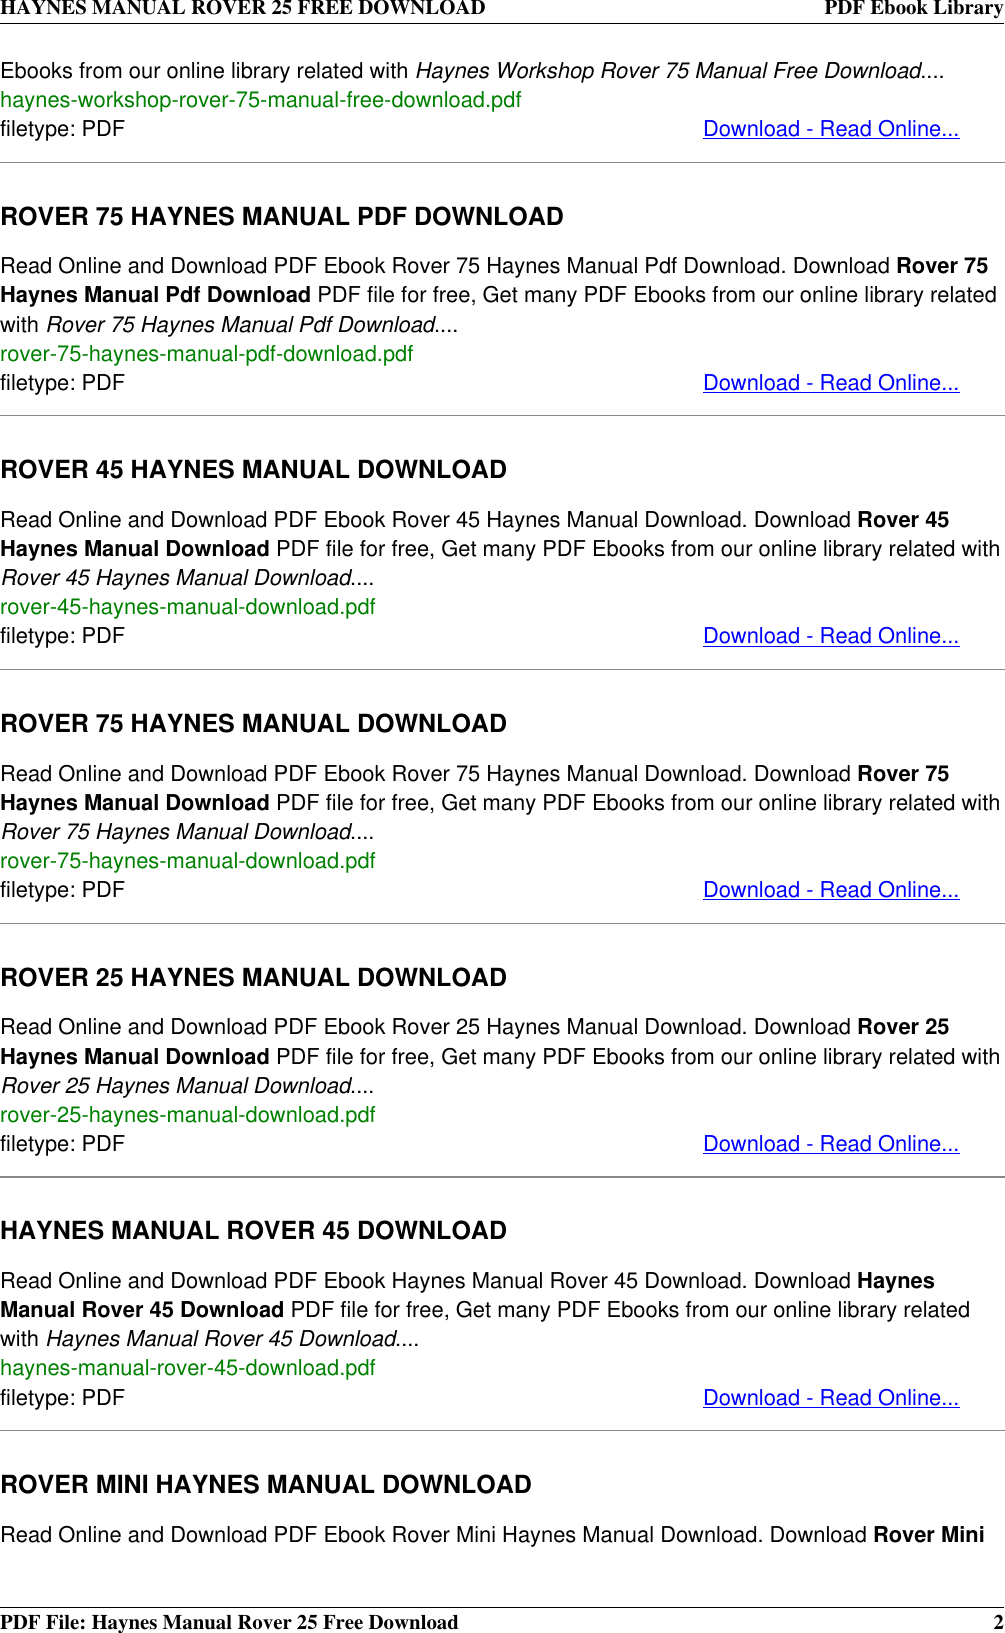 Page 2 of 4 - Haynes-Manuals Haynes-Manuals-Haynes-Manuals-Automobile-25-Users-Manual- HAYNES MANUAL ROVER 25  Haynes-manuals-haynes-manuals-automobile-25-users-manual